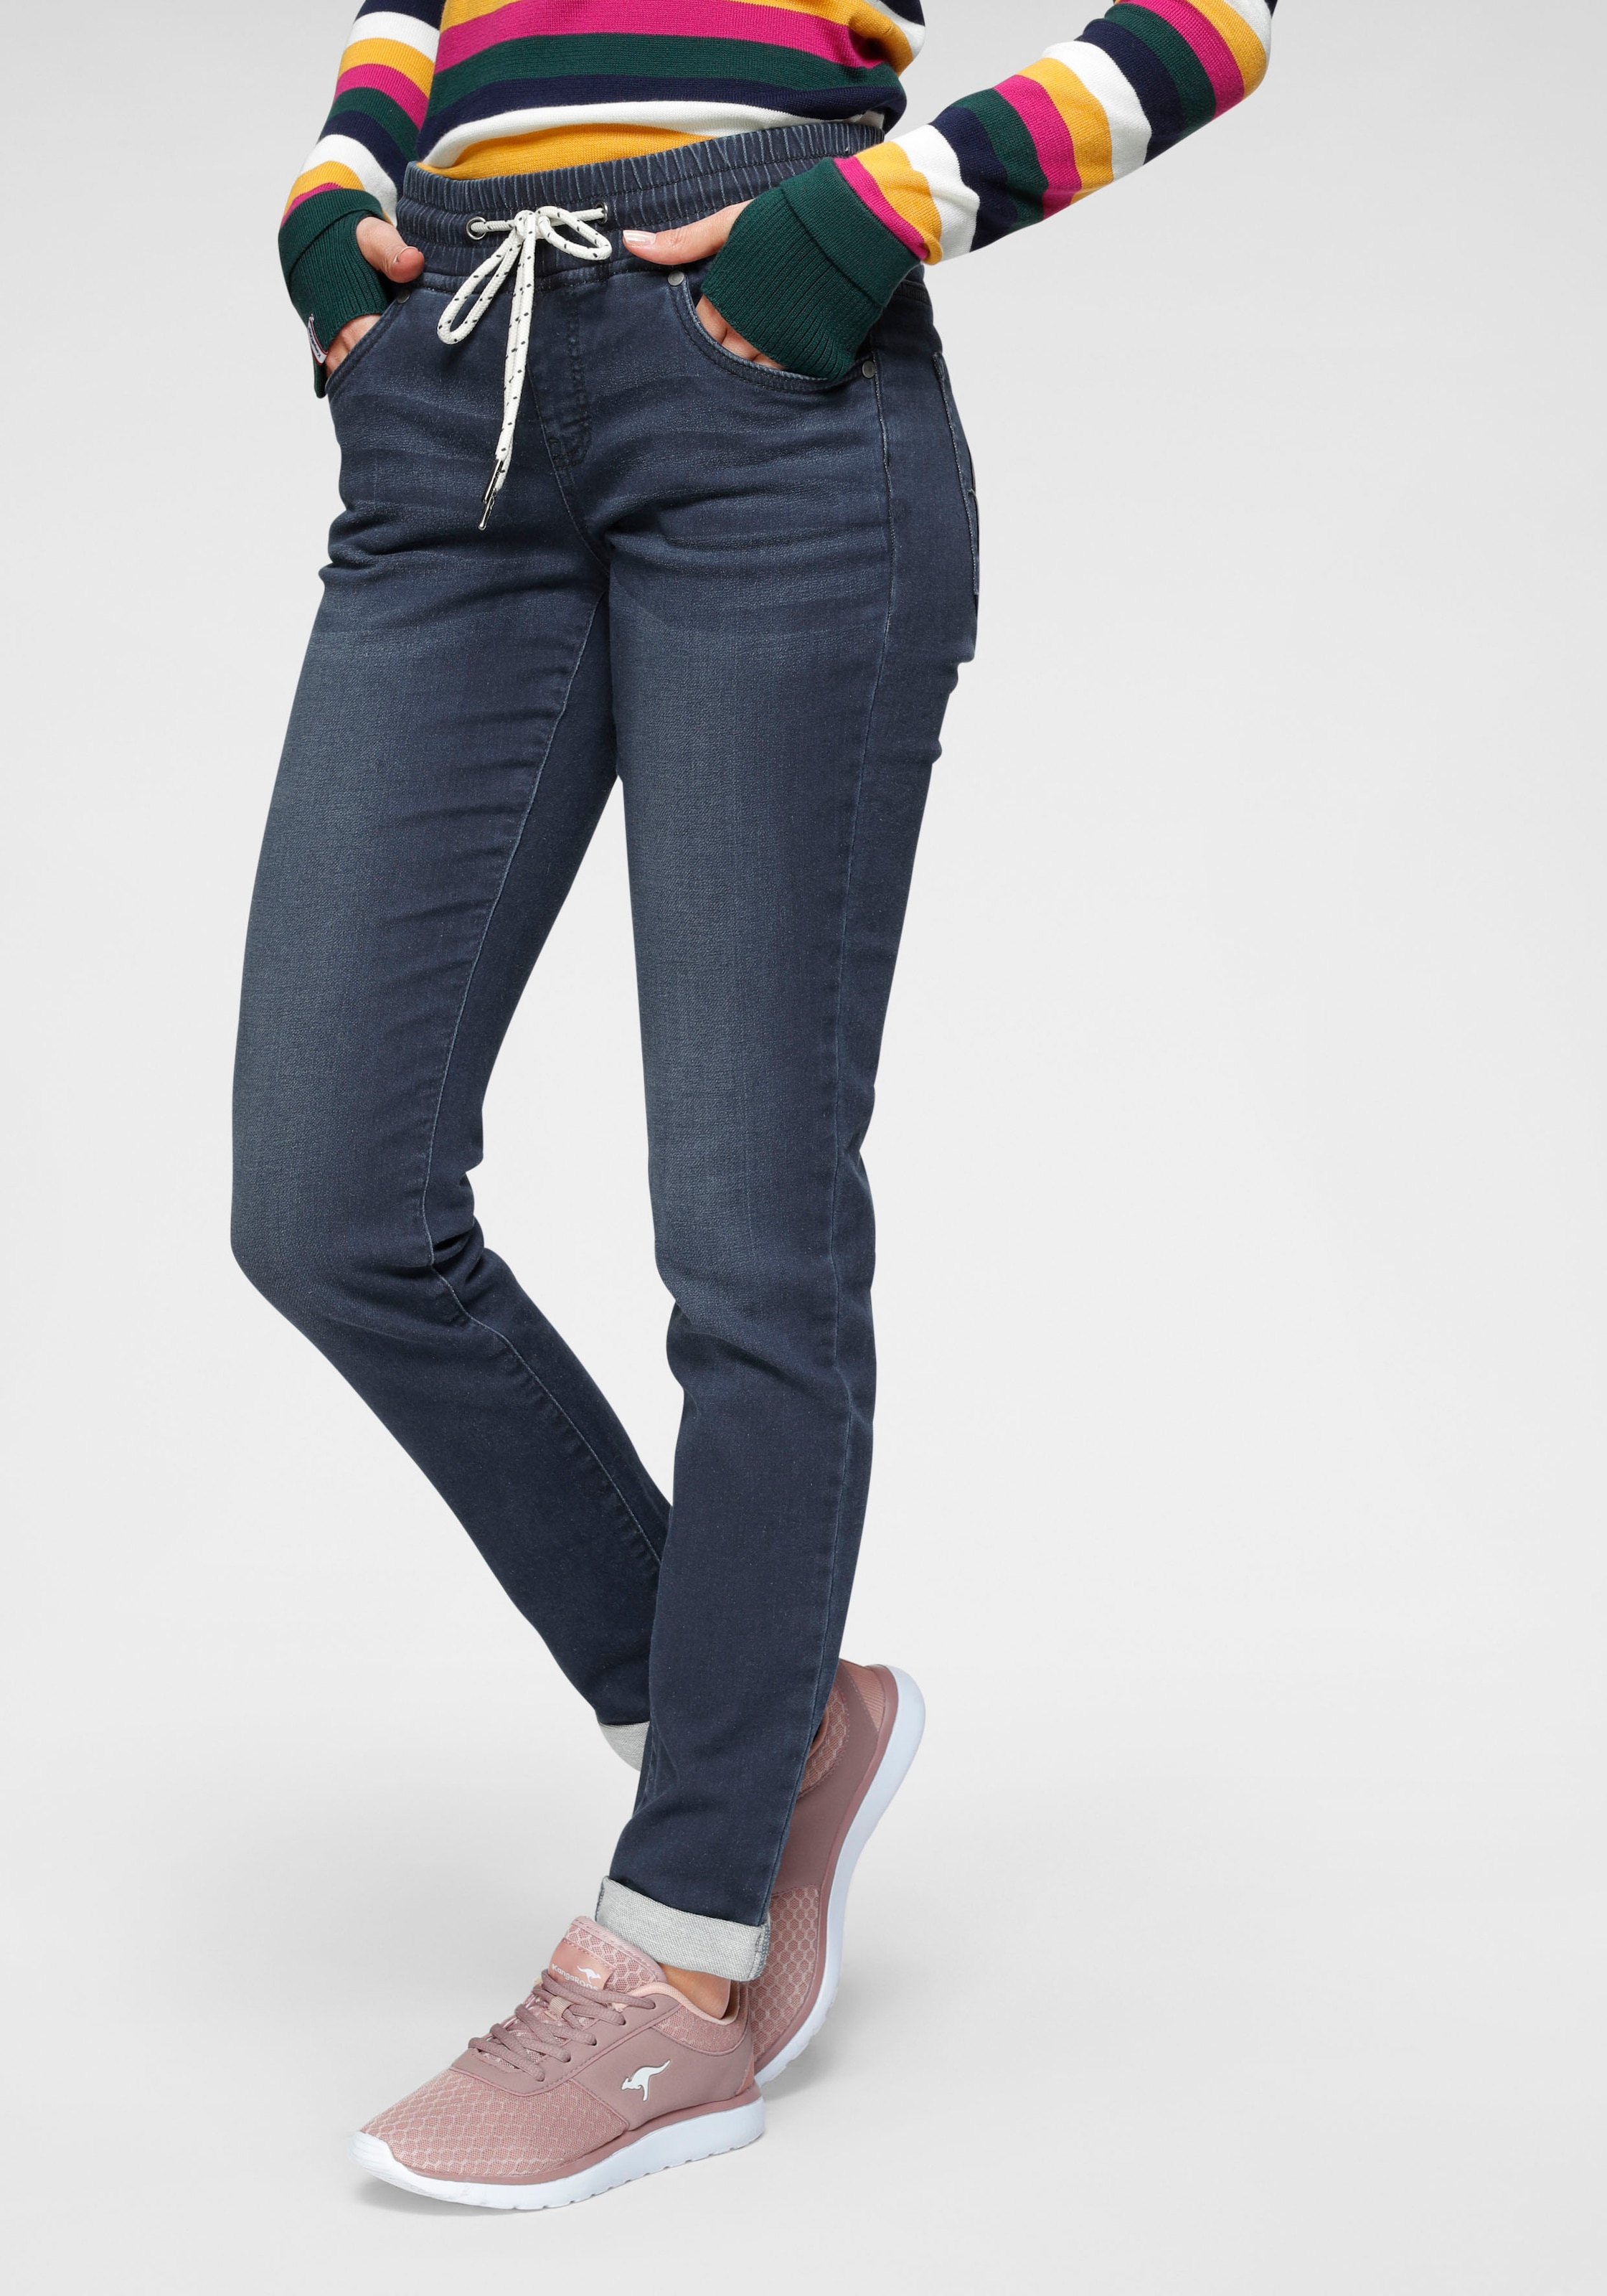 KangaROOS Bequeme Jeans Online-Shop bestellen im